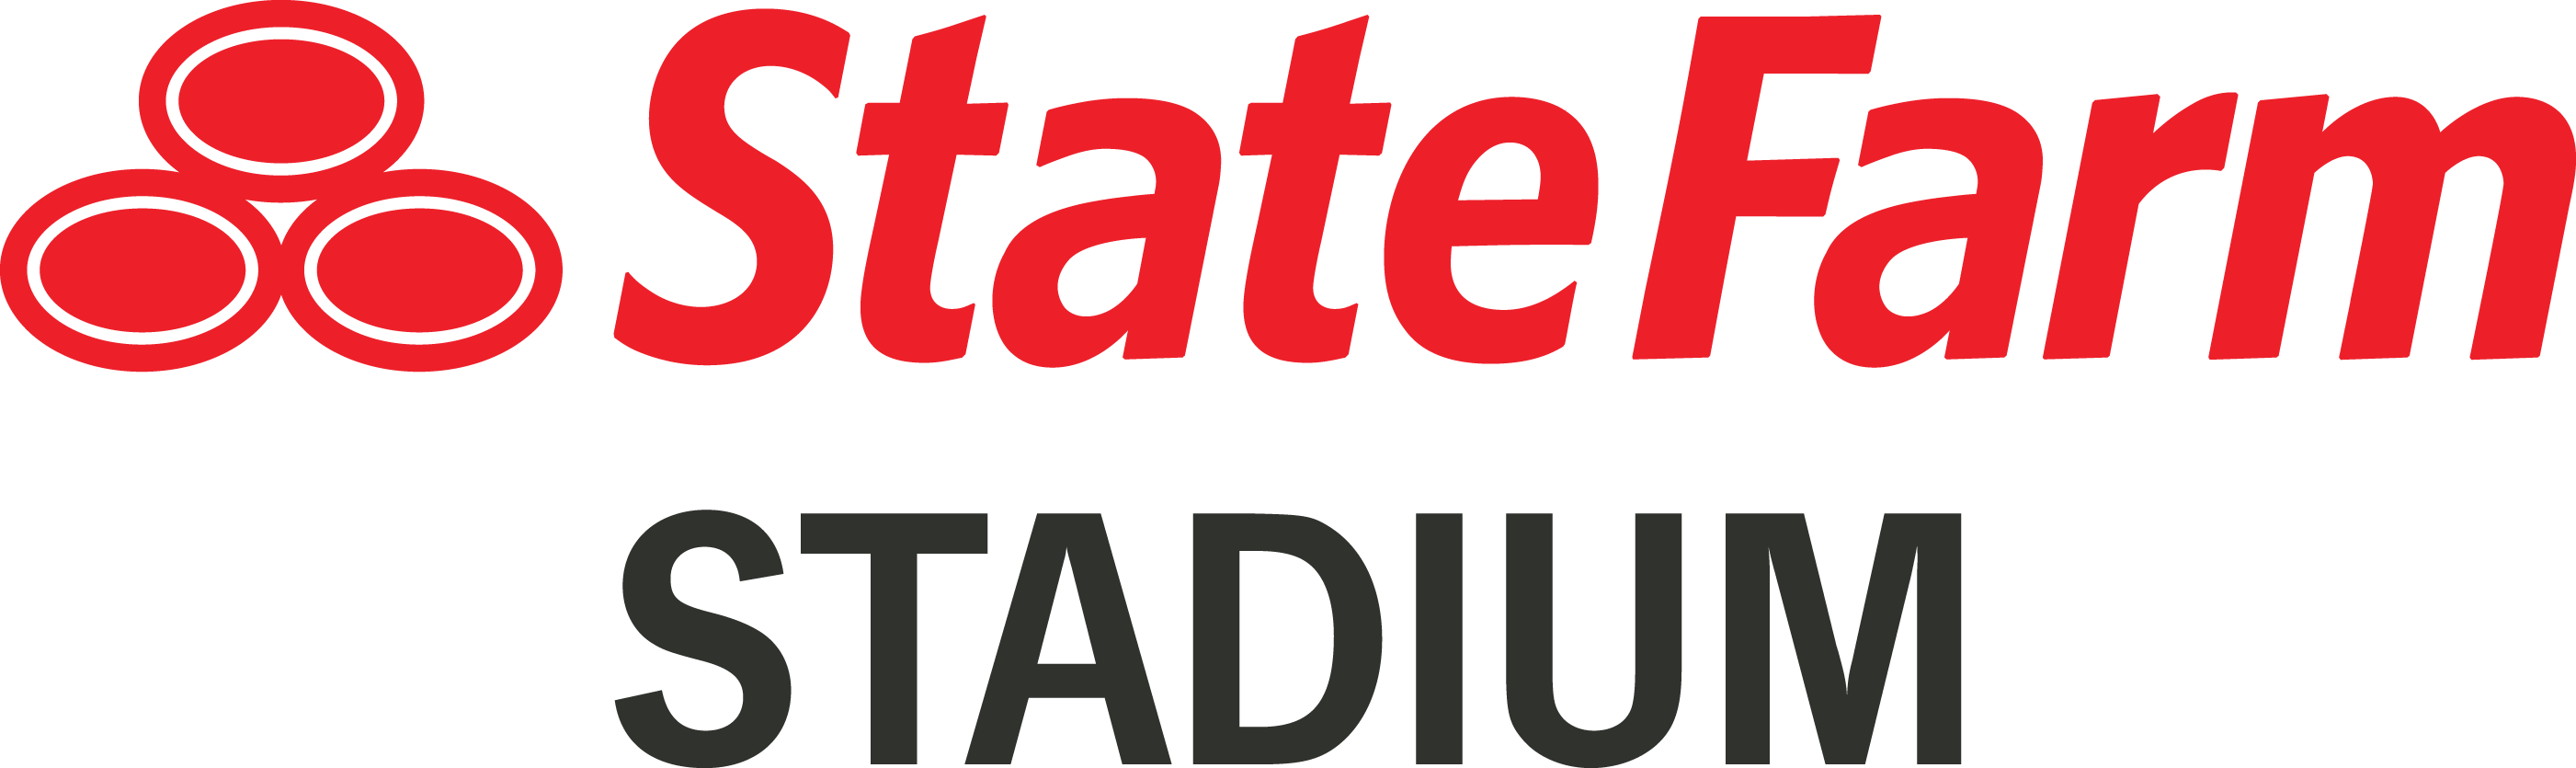 State Farm Stadium Logo